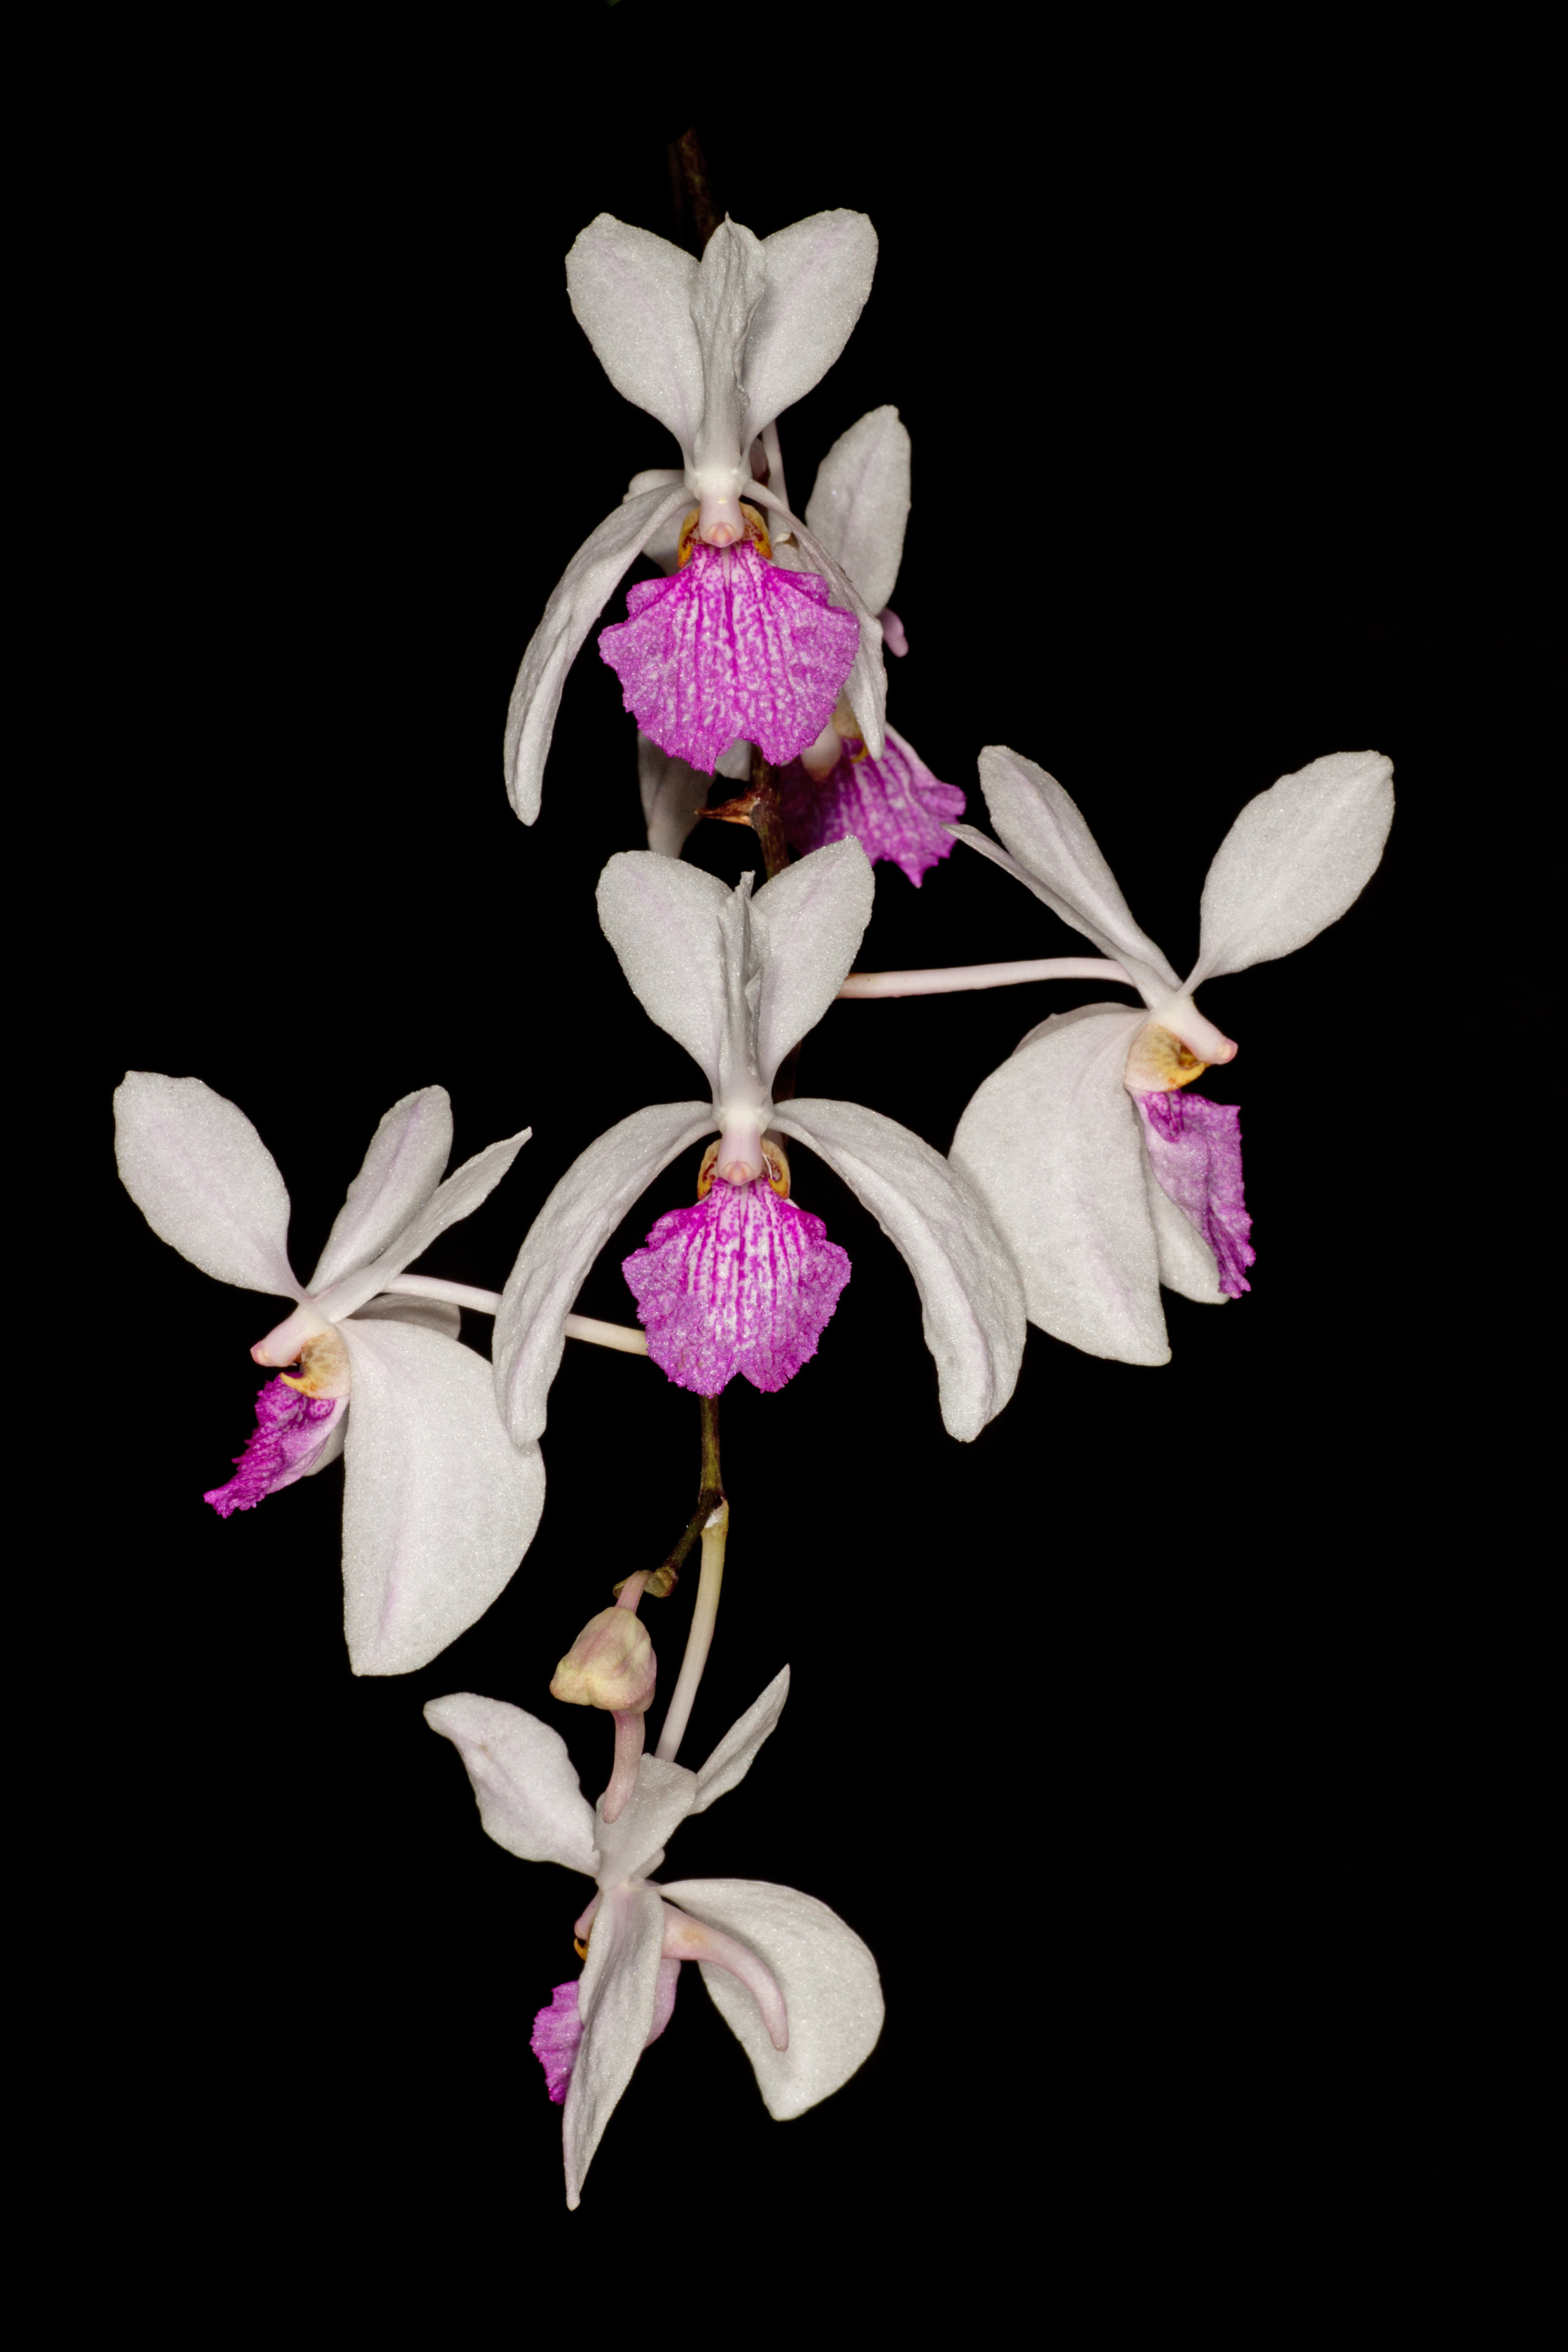 Orchids species Holcoglossum kimballianum 1 Plants bloom size